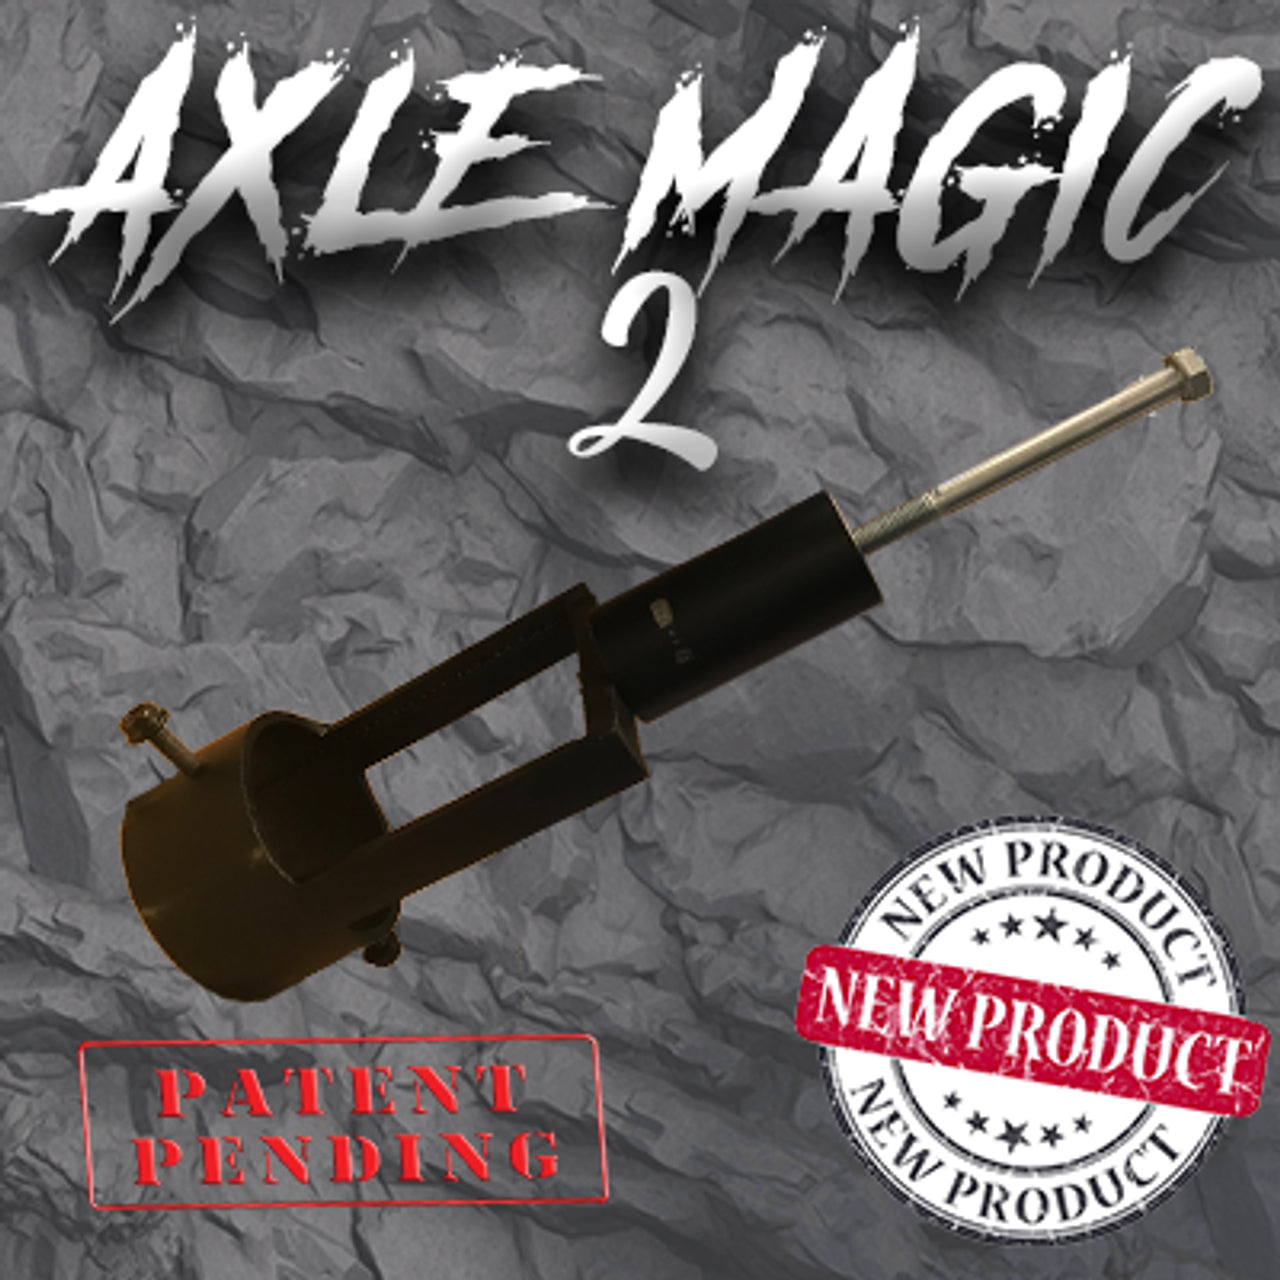 AXLE MAGIC Axle removal tool